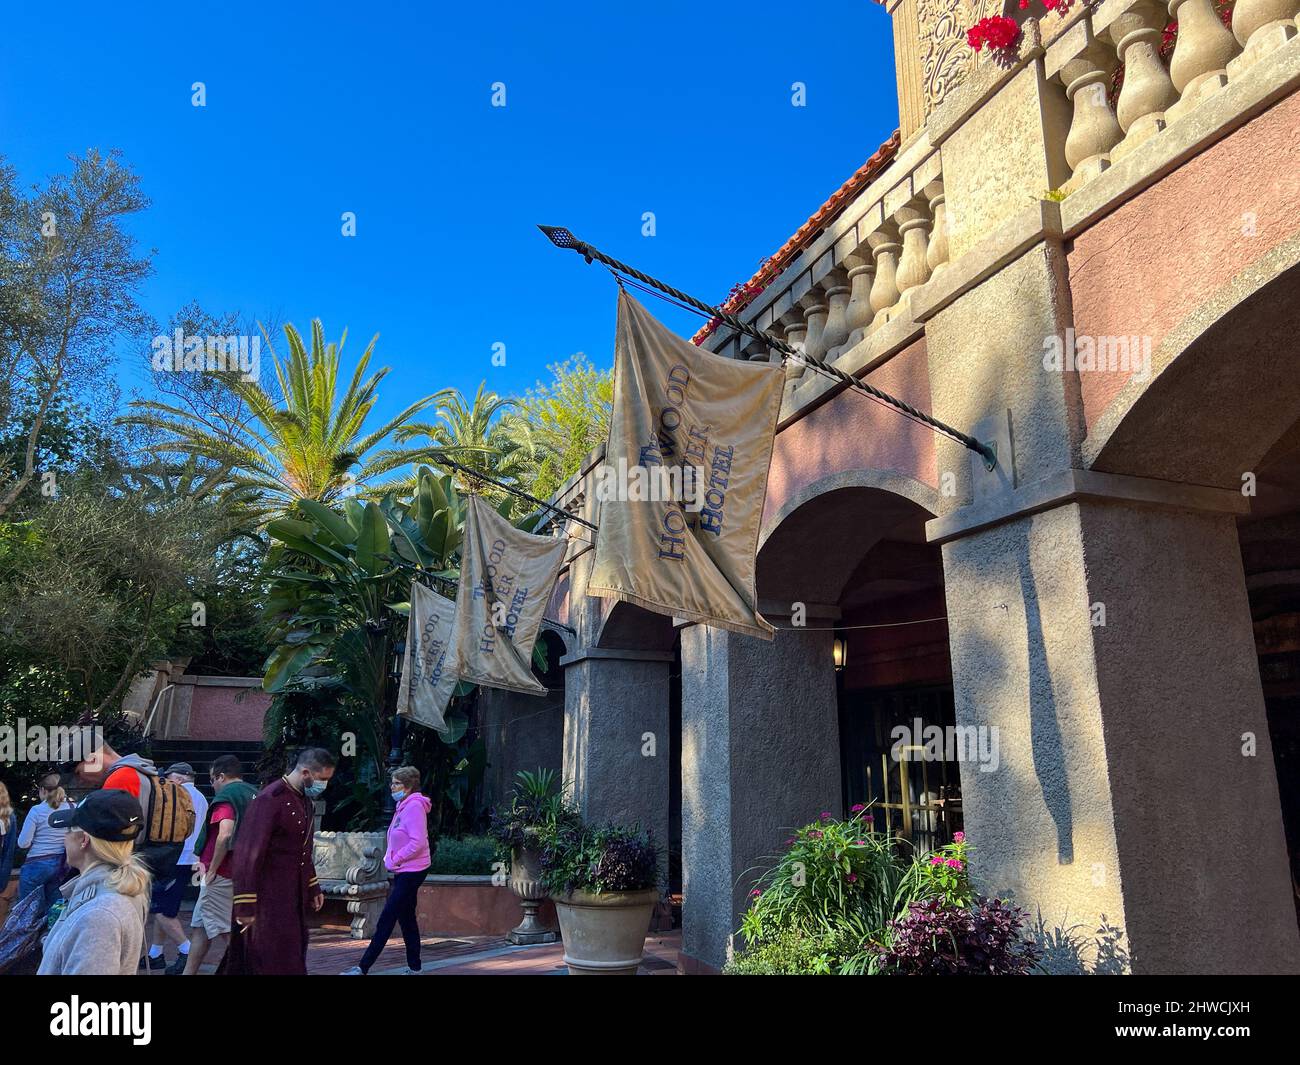 Orlando, FL USA- November 27, 2021: The Tower of Terror ride at Hollywood Studios Walt Disney World in Orlando, Florida. Stock Photo